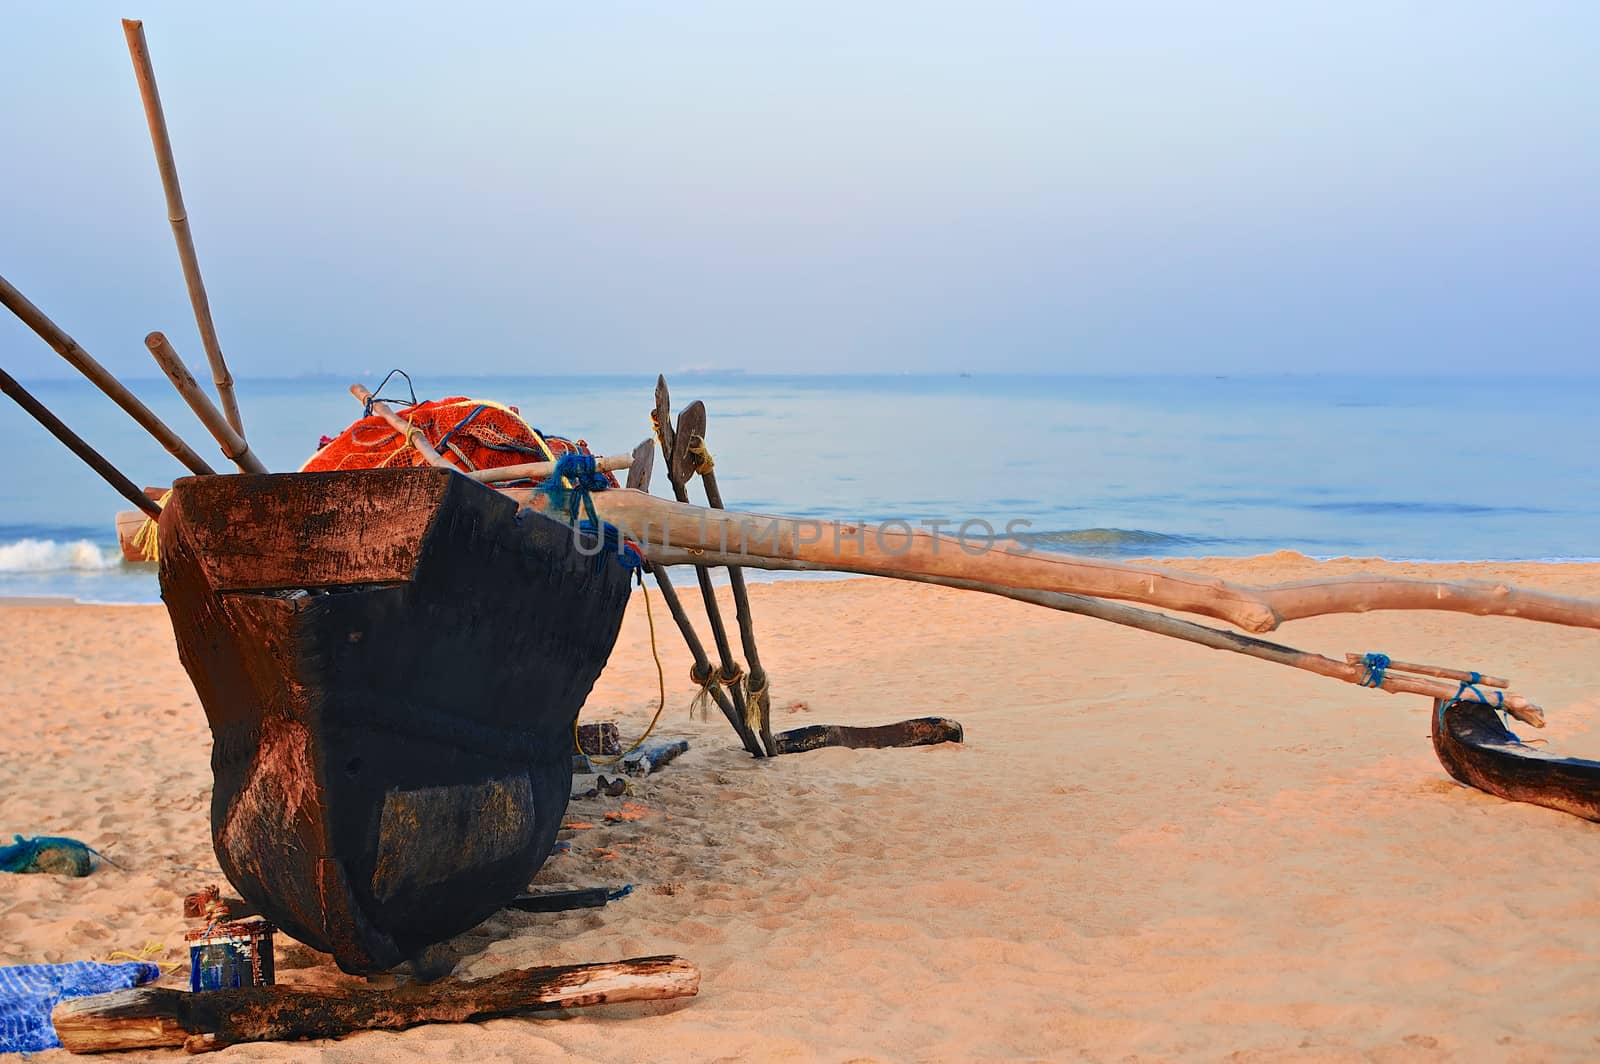 Old boat in Goa beach by styf22